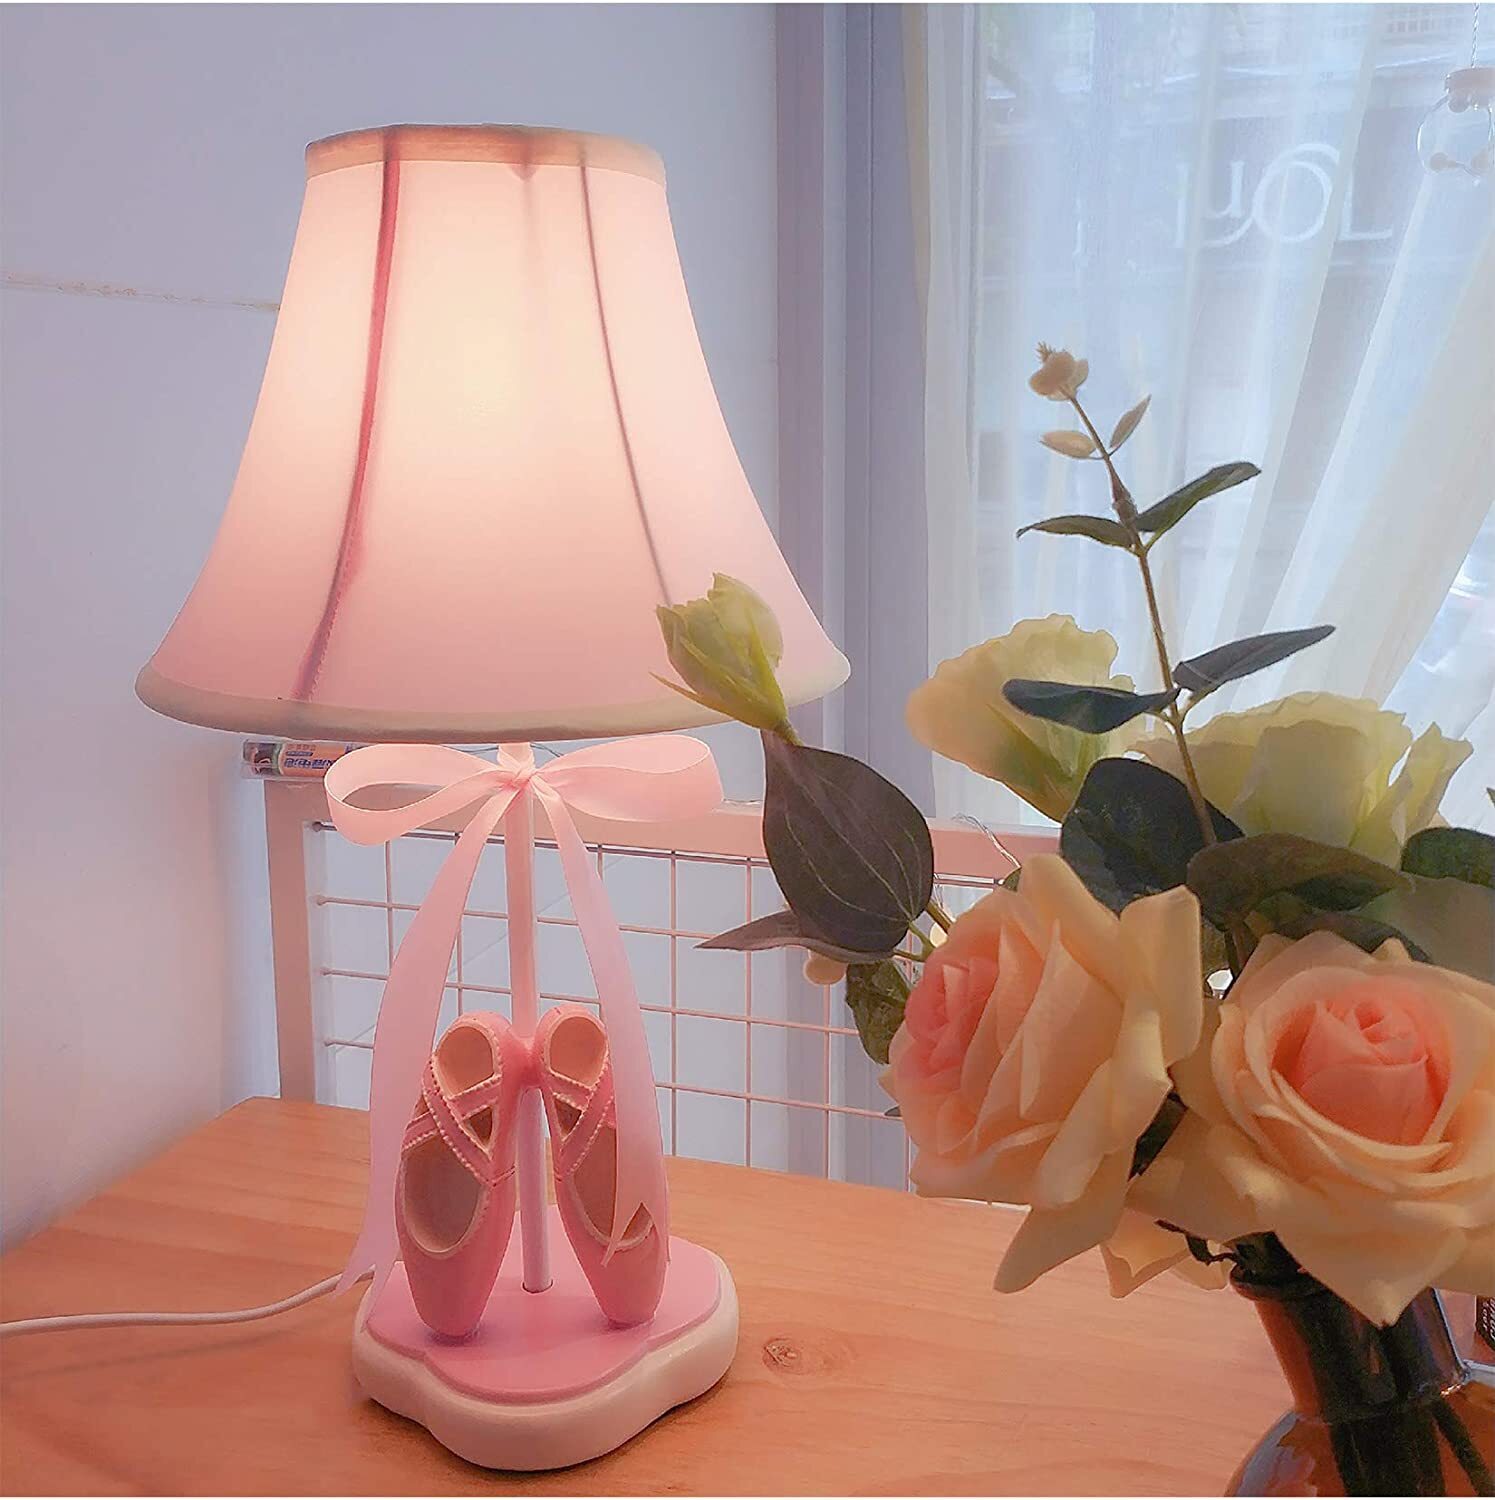 Ballerina’s Shoe Lamp